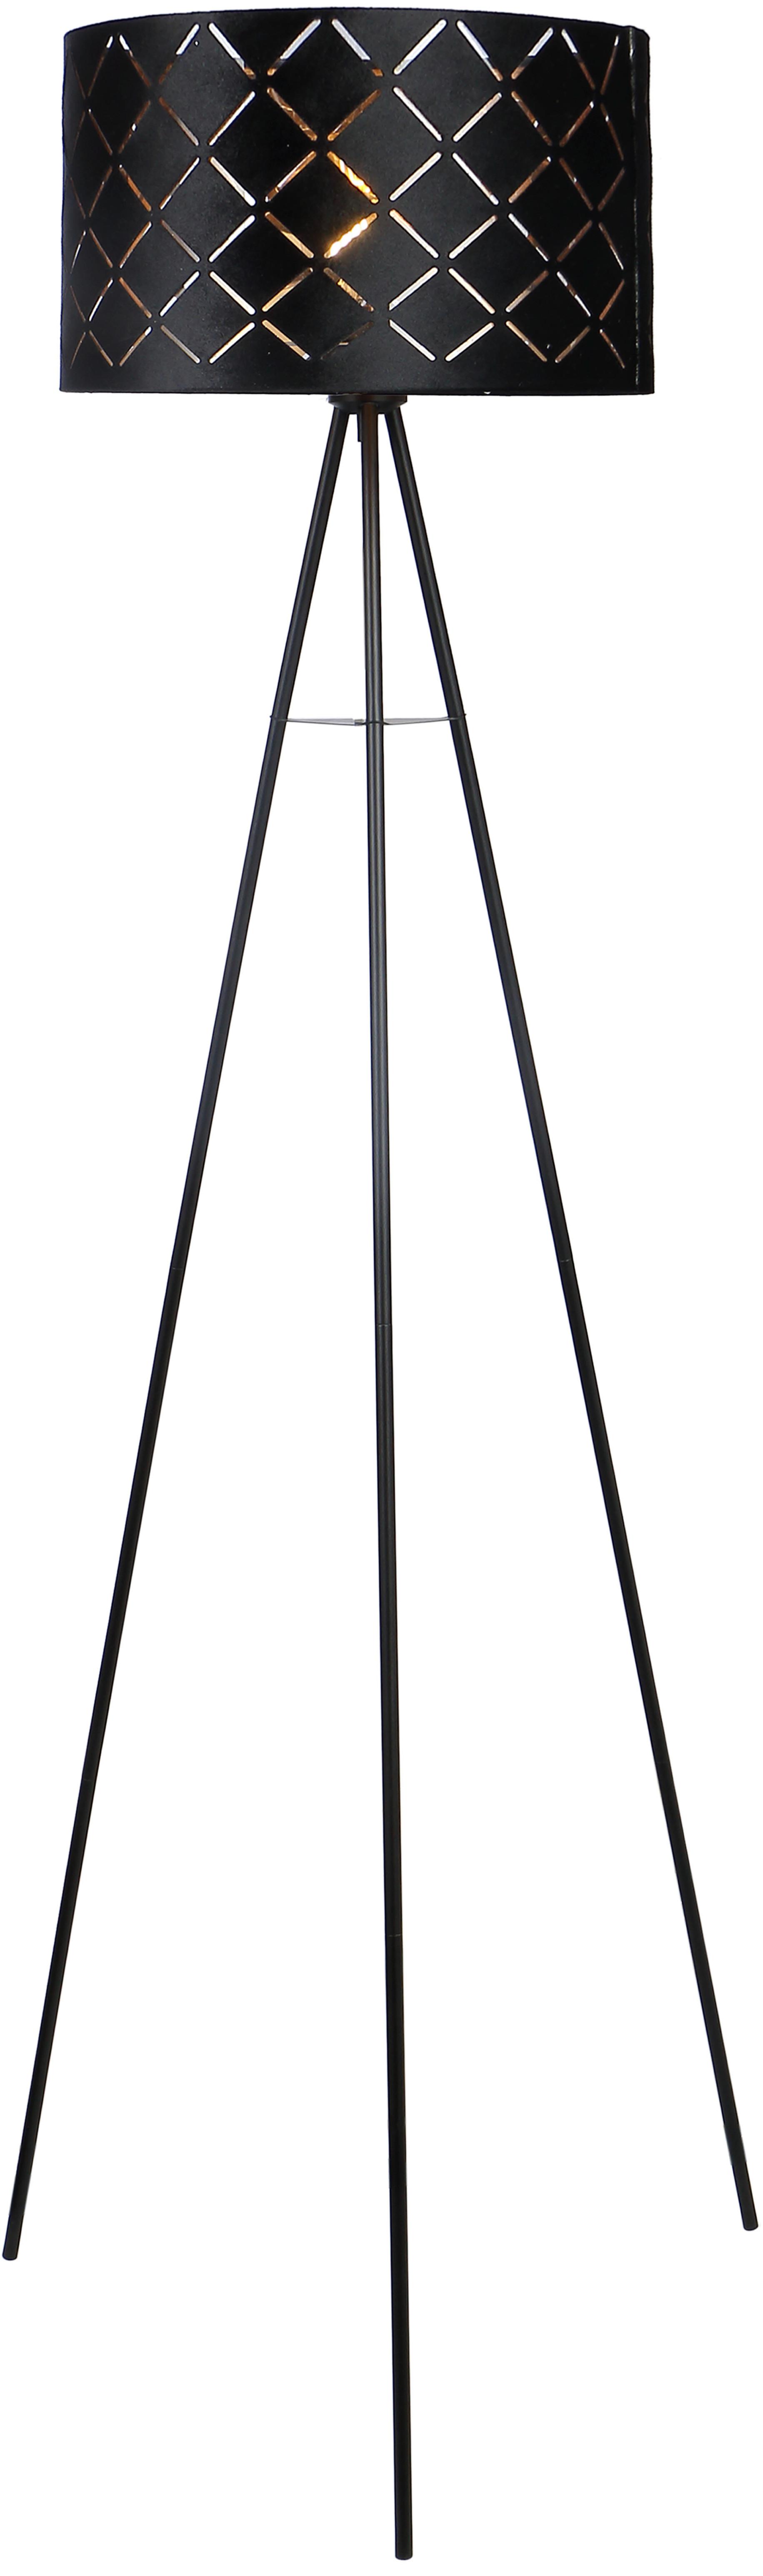 Stojací Lampa Evelyn V: 149cm, 40 Watt - černá, Lifestyle, kov (149cm) - Modern Living